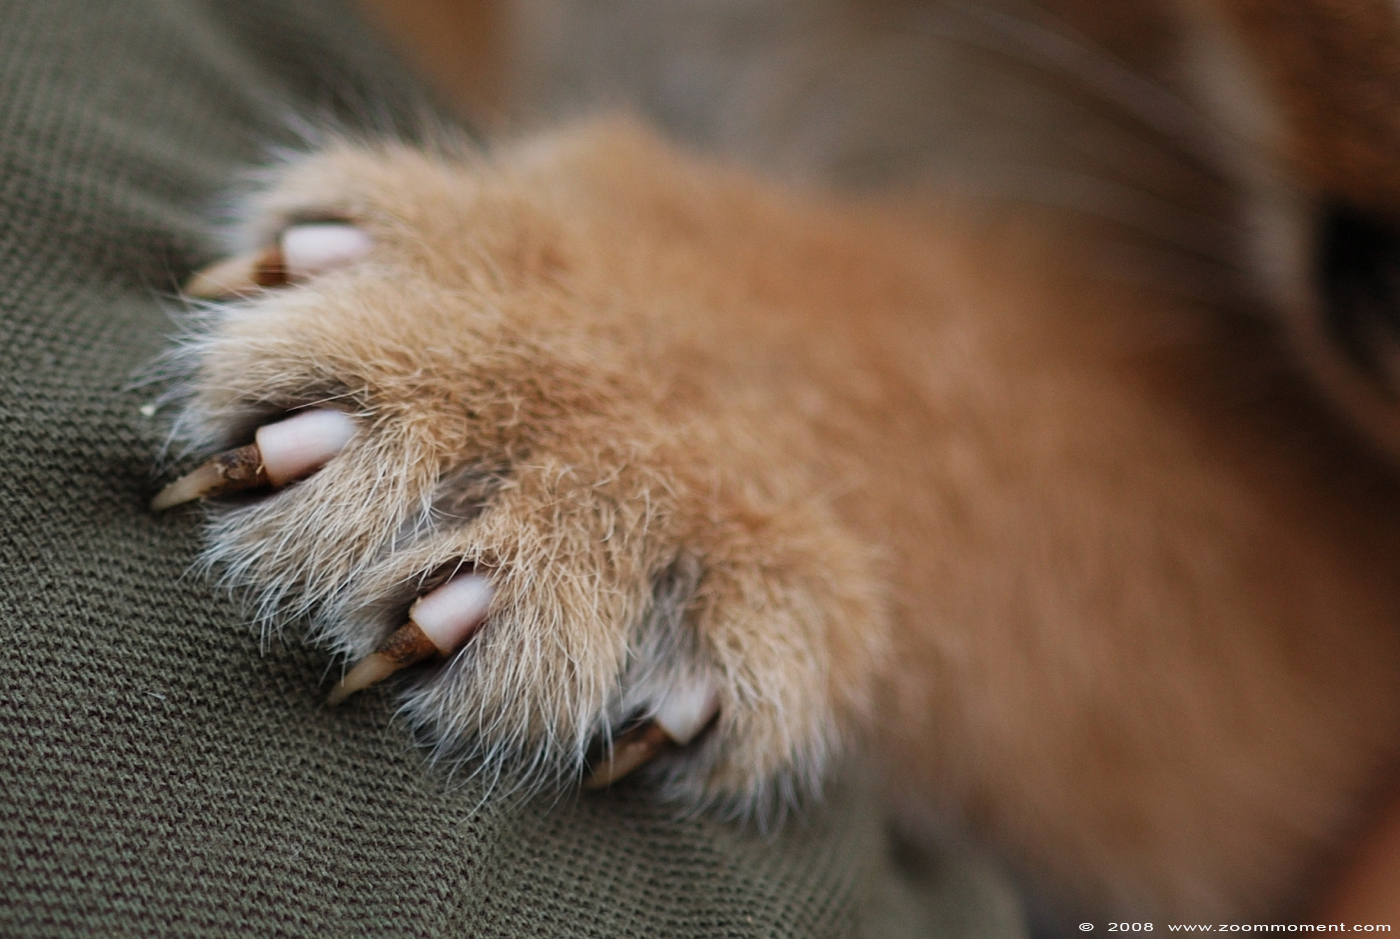 caracal of woestijnlynx ( Caracal caracal )
Ključne besede: Olmen zoo Belgie Belgium caracal woestijnlynx cat kat